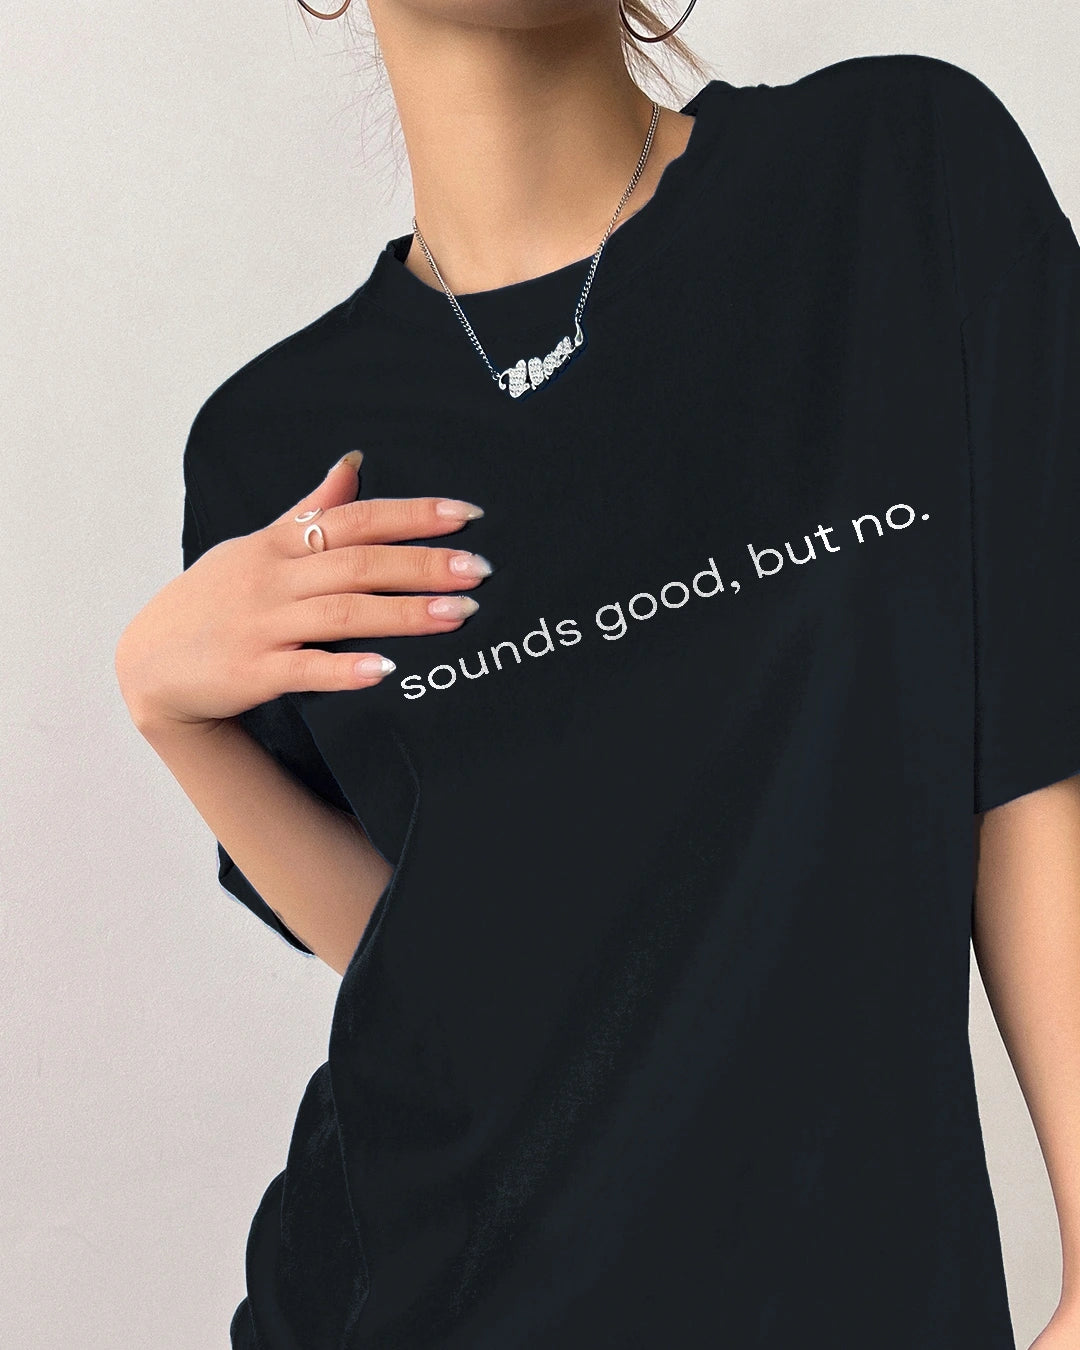 Tumblr (girl) Women's T-Shirt